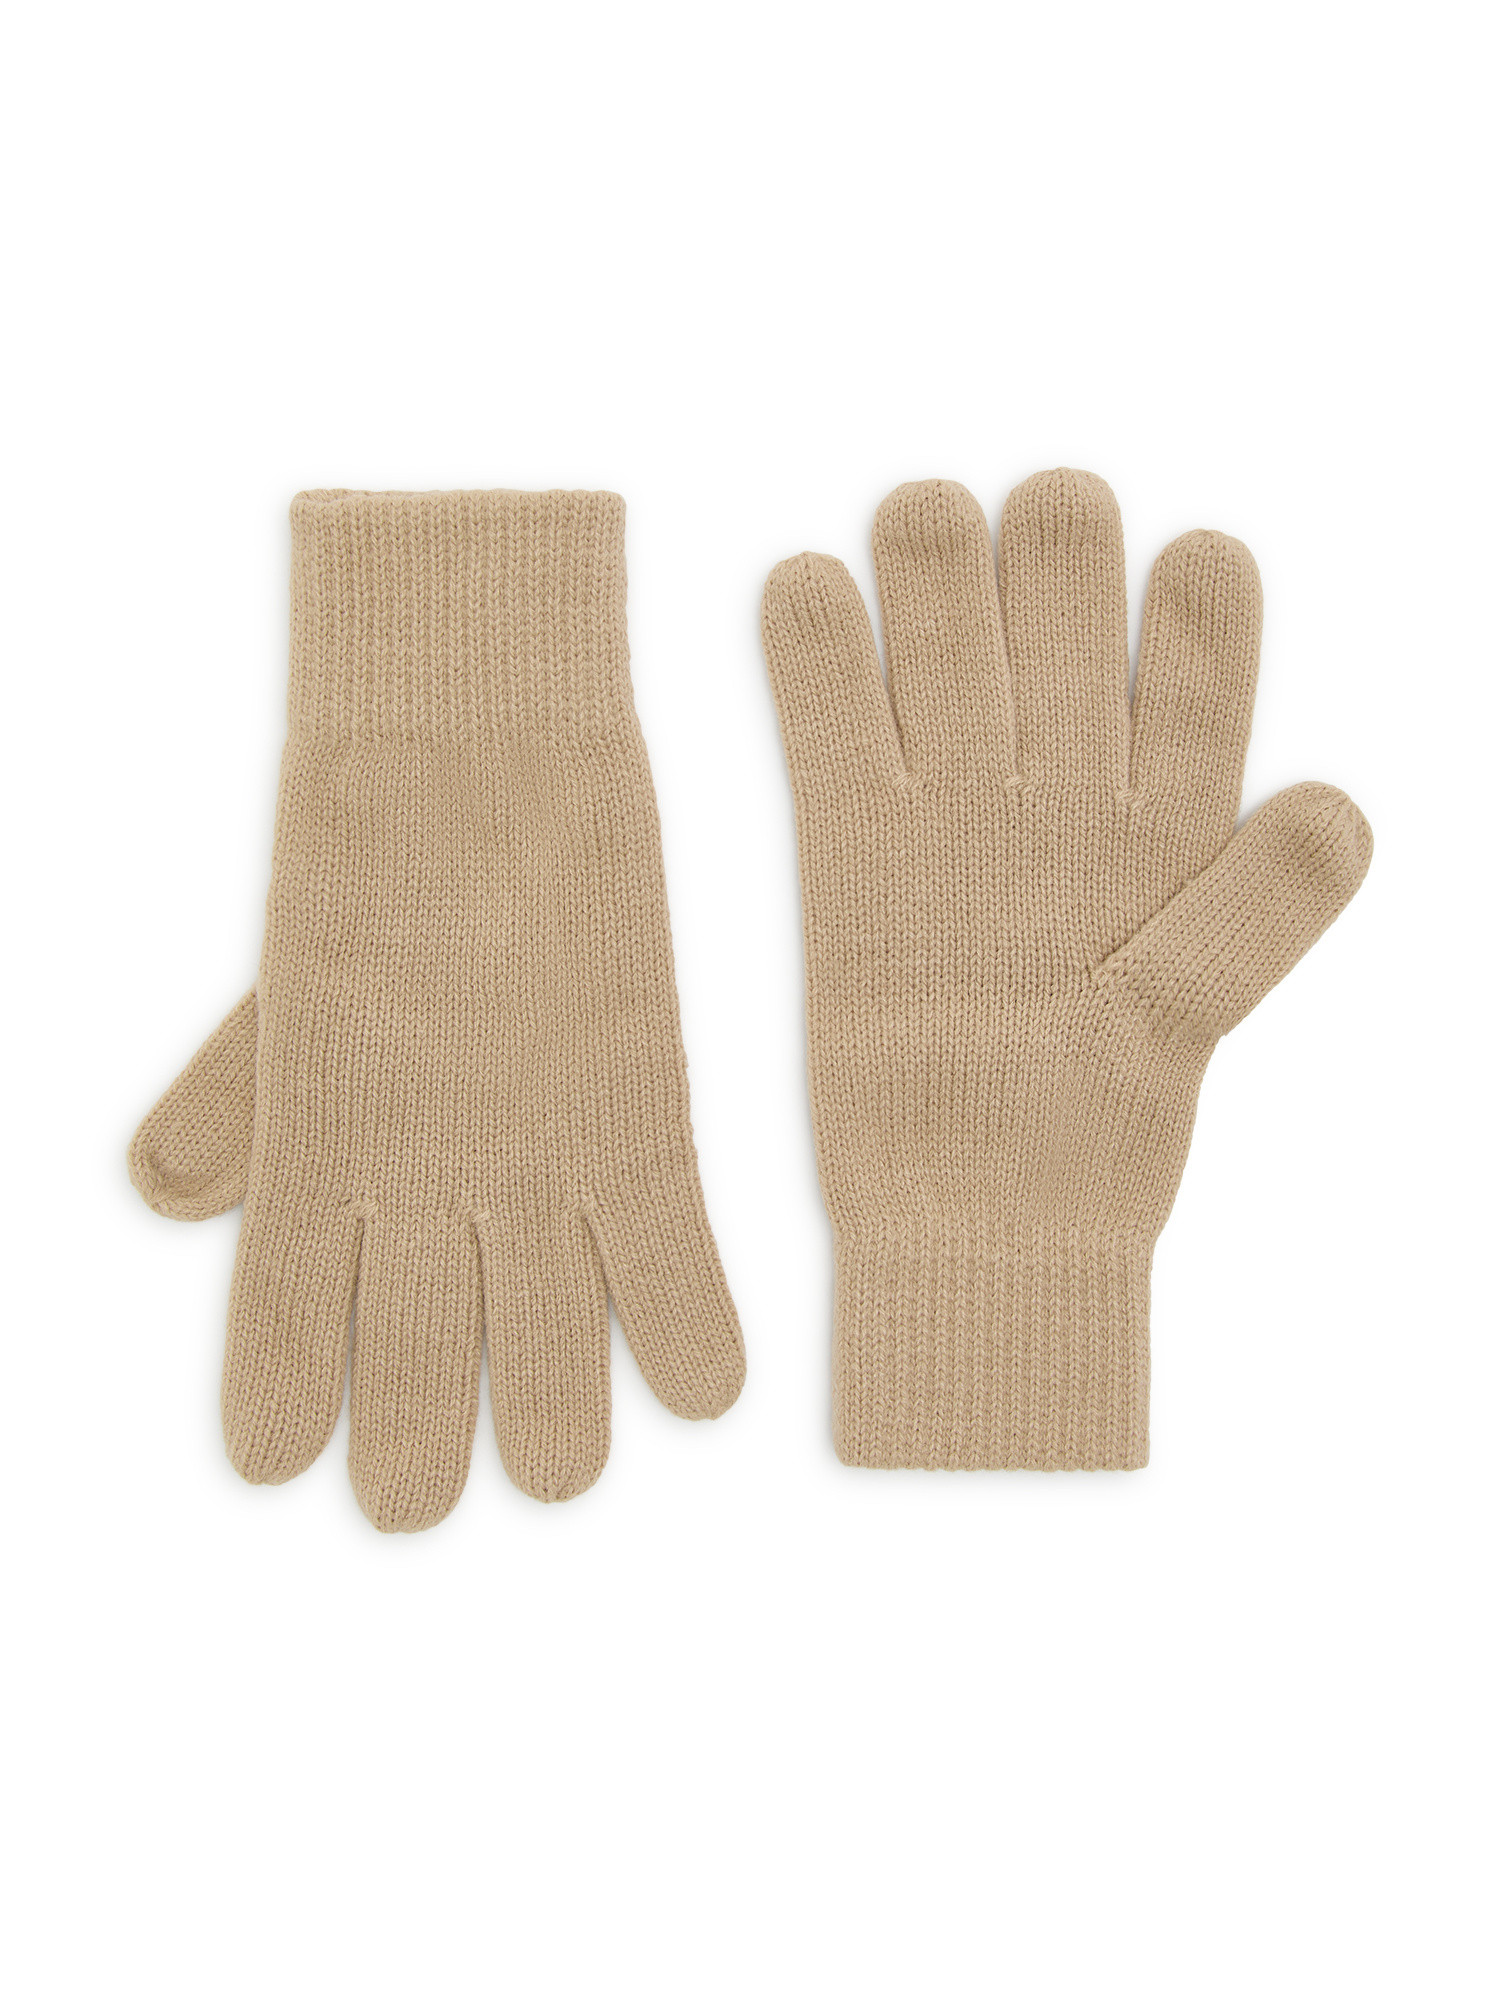 Luca D'Altieri - Basic knitted gloves, Beige, large image number 0